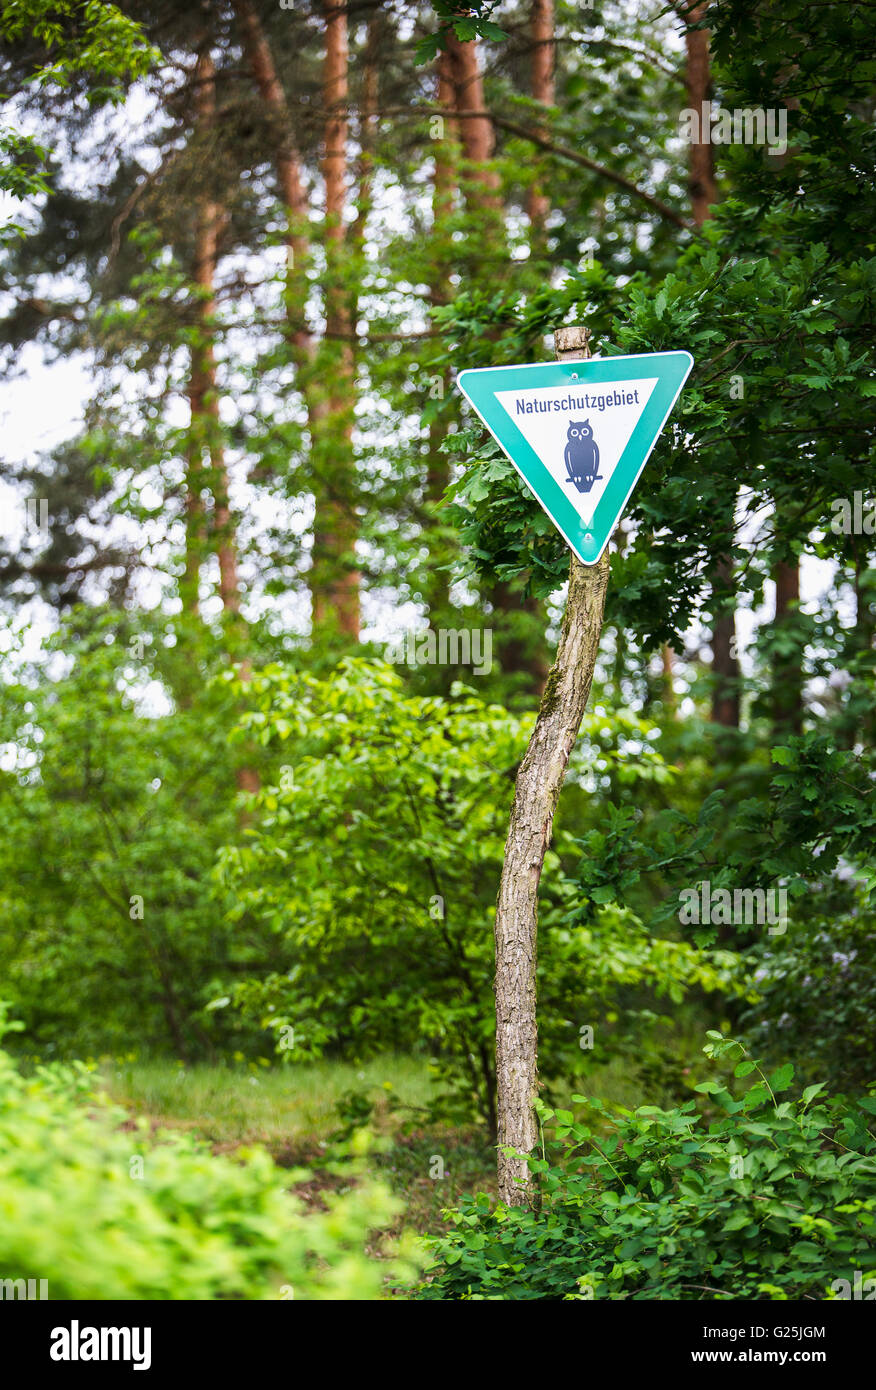 nature reserve sign indicating label german naturschutzgebiet Stock Photo